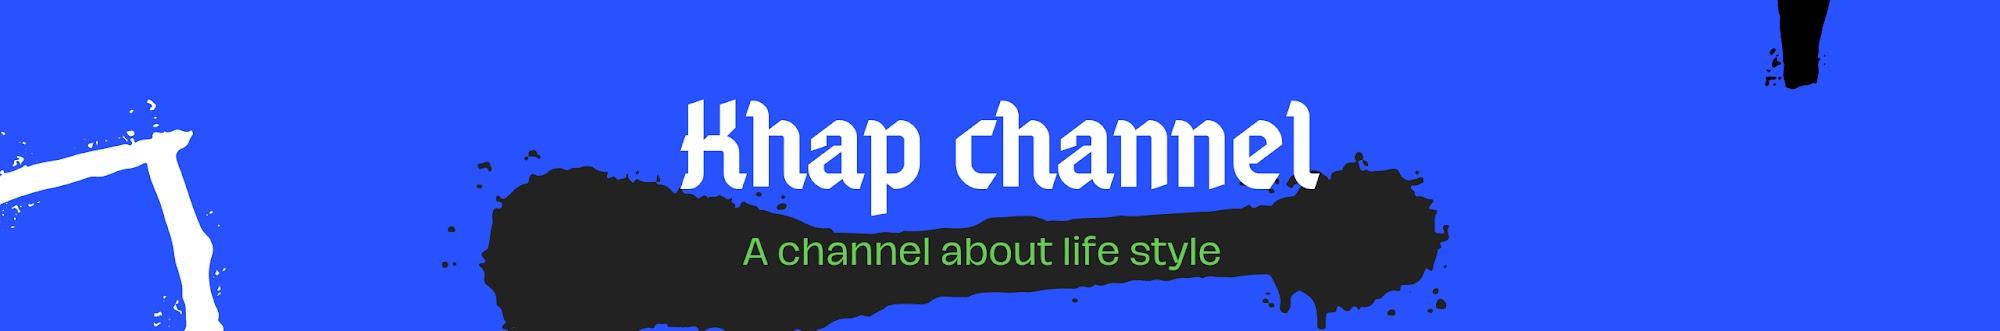 Khap channel